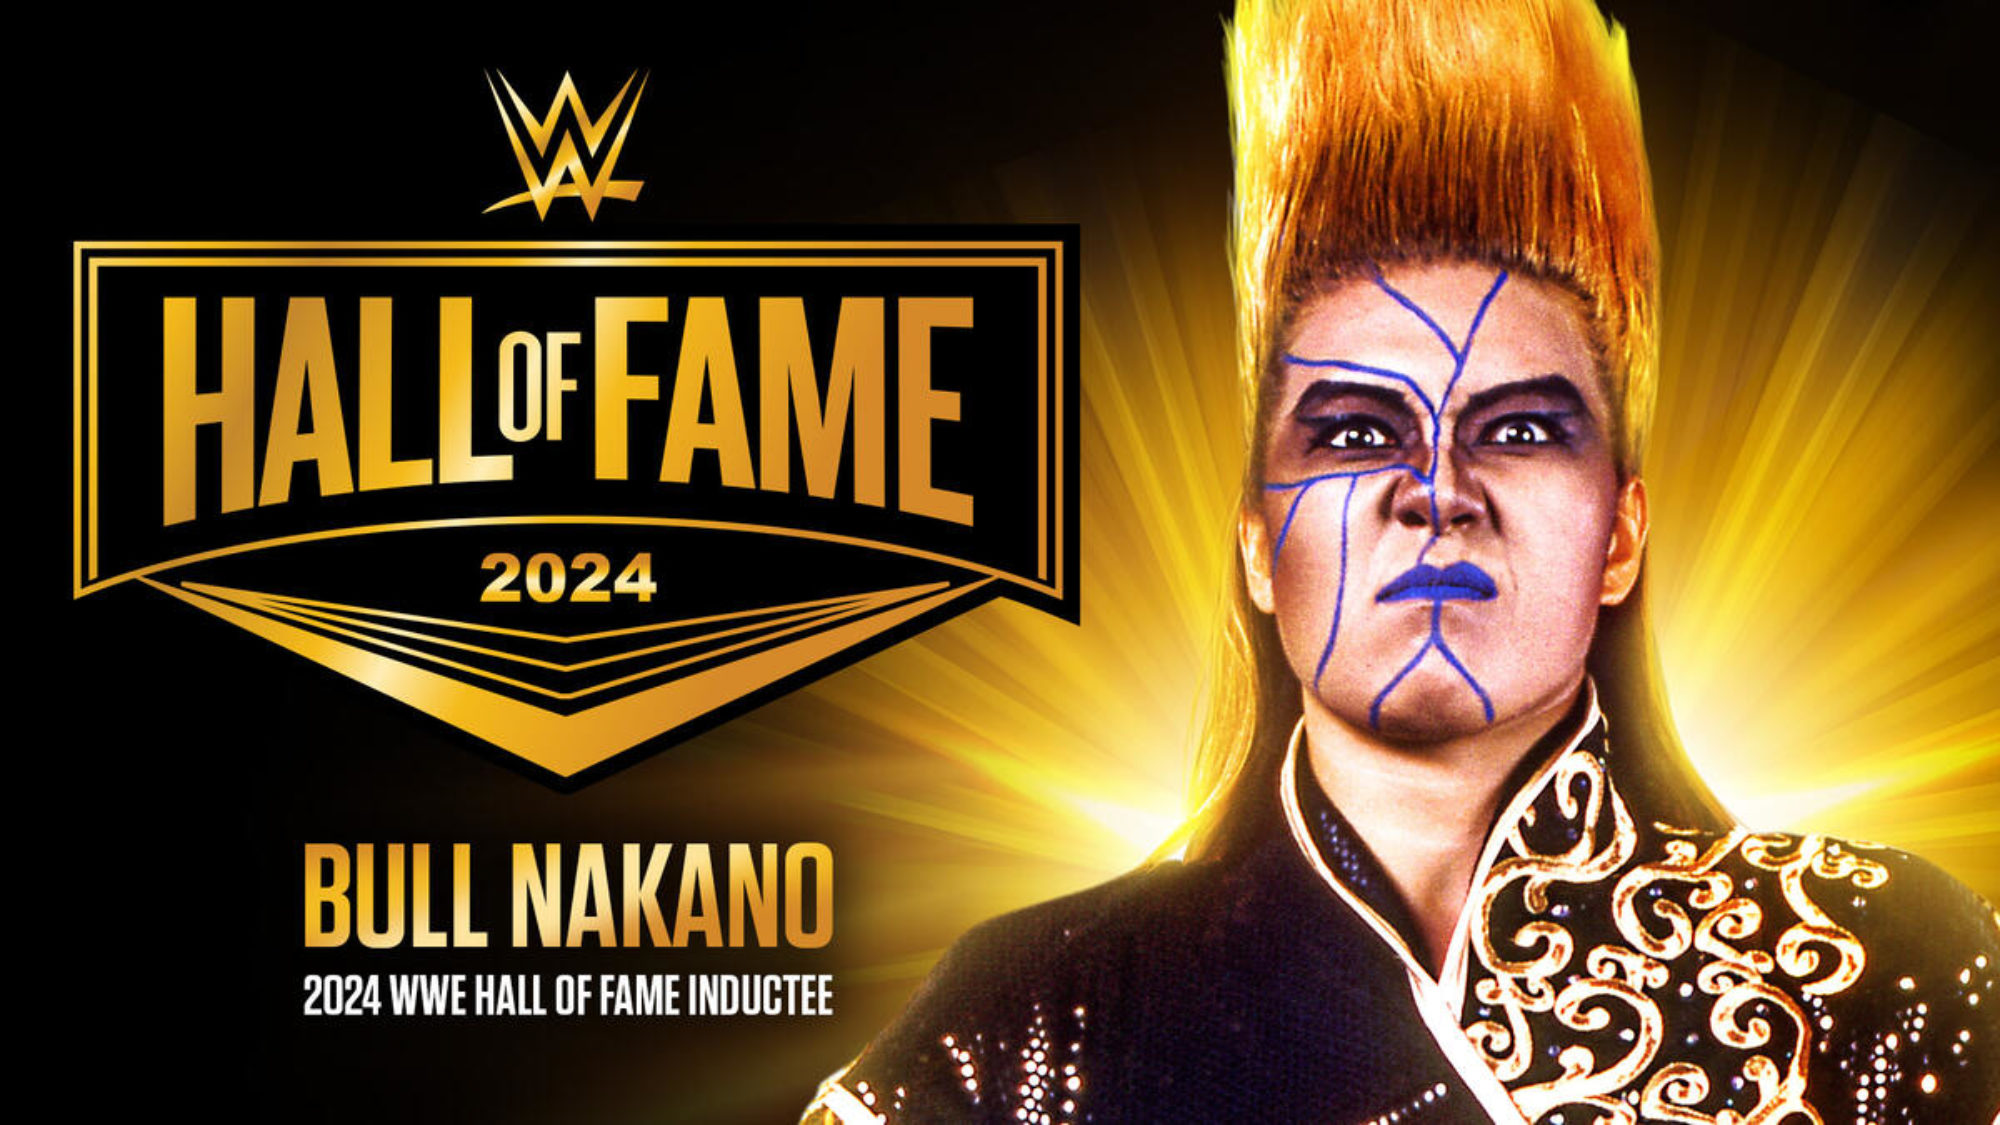 Bull Nakano Named Next 2024 WWE Hall of Fame Inductee